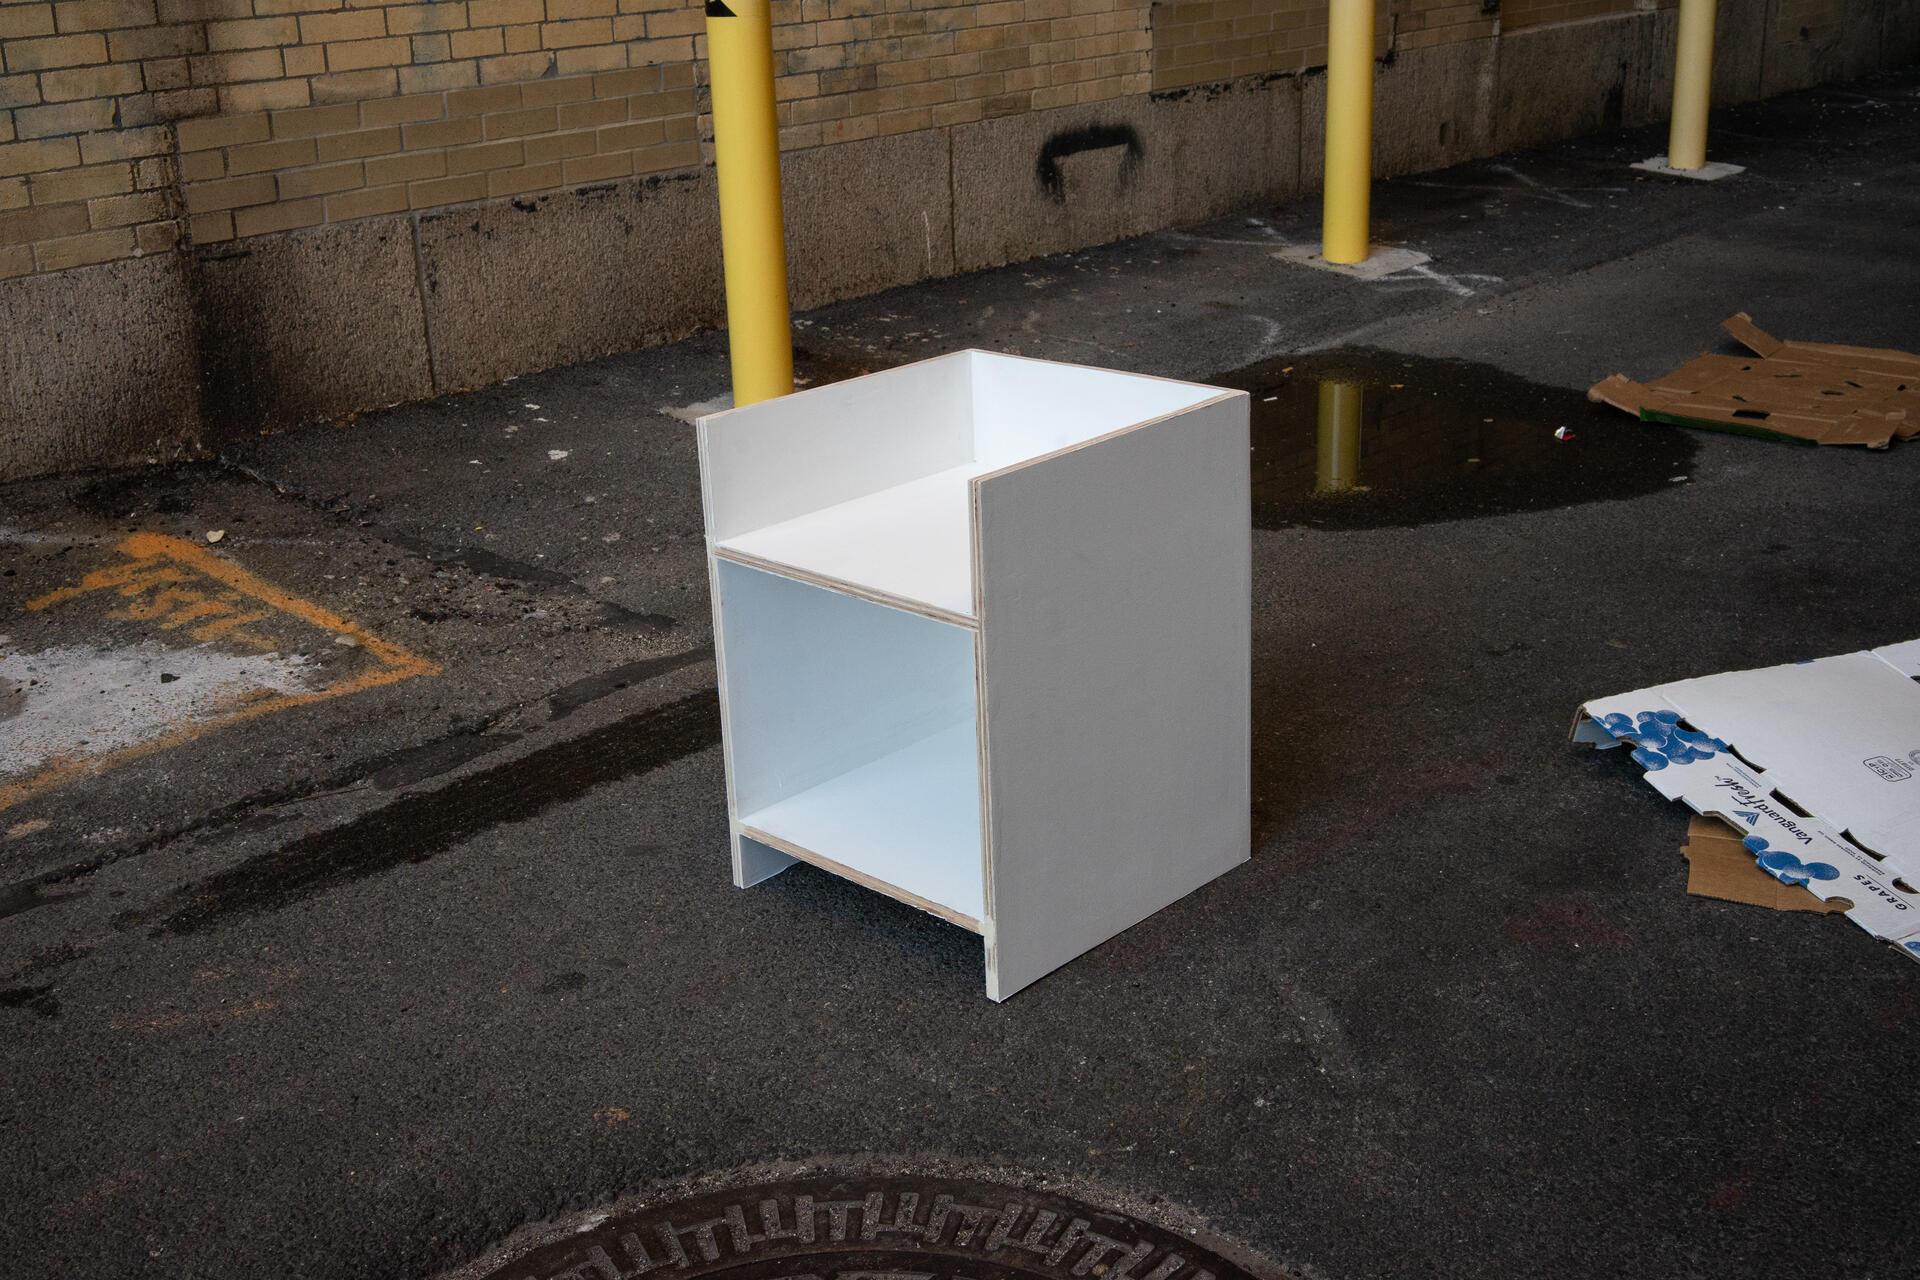 A stark white chair in a rigid geomgetric form sits in a dark alleyway.